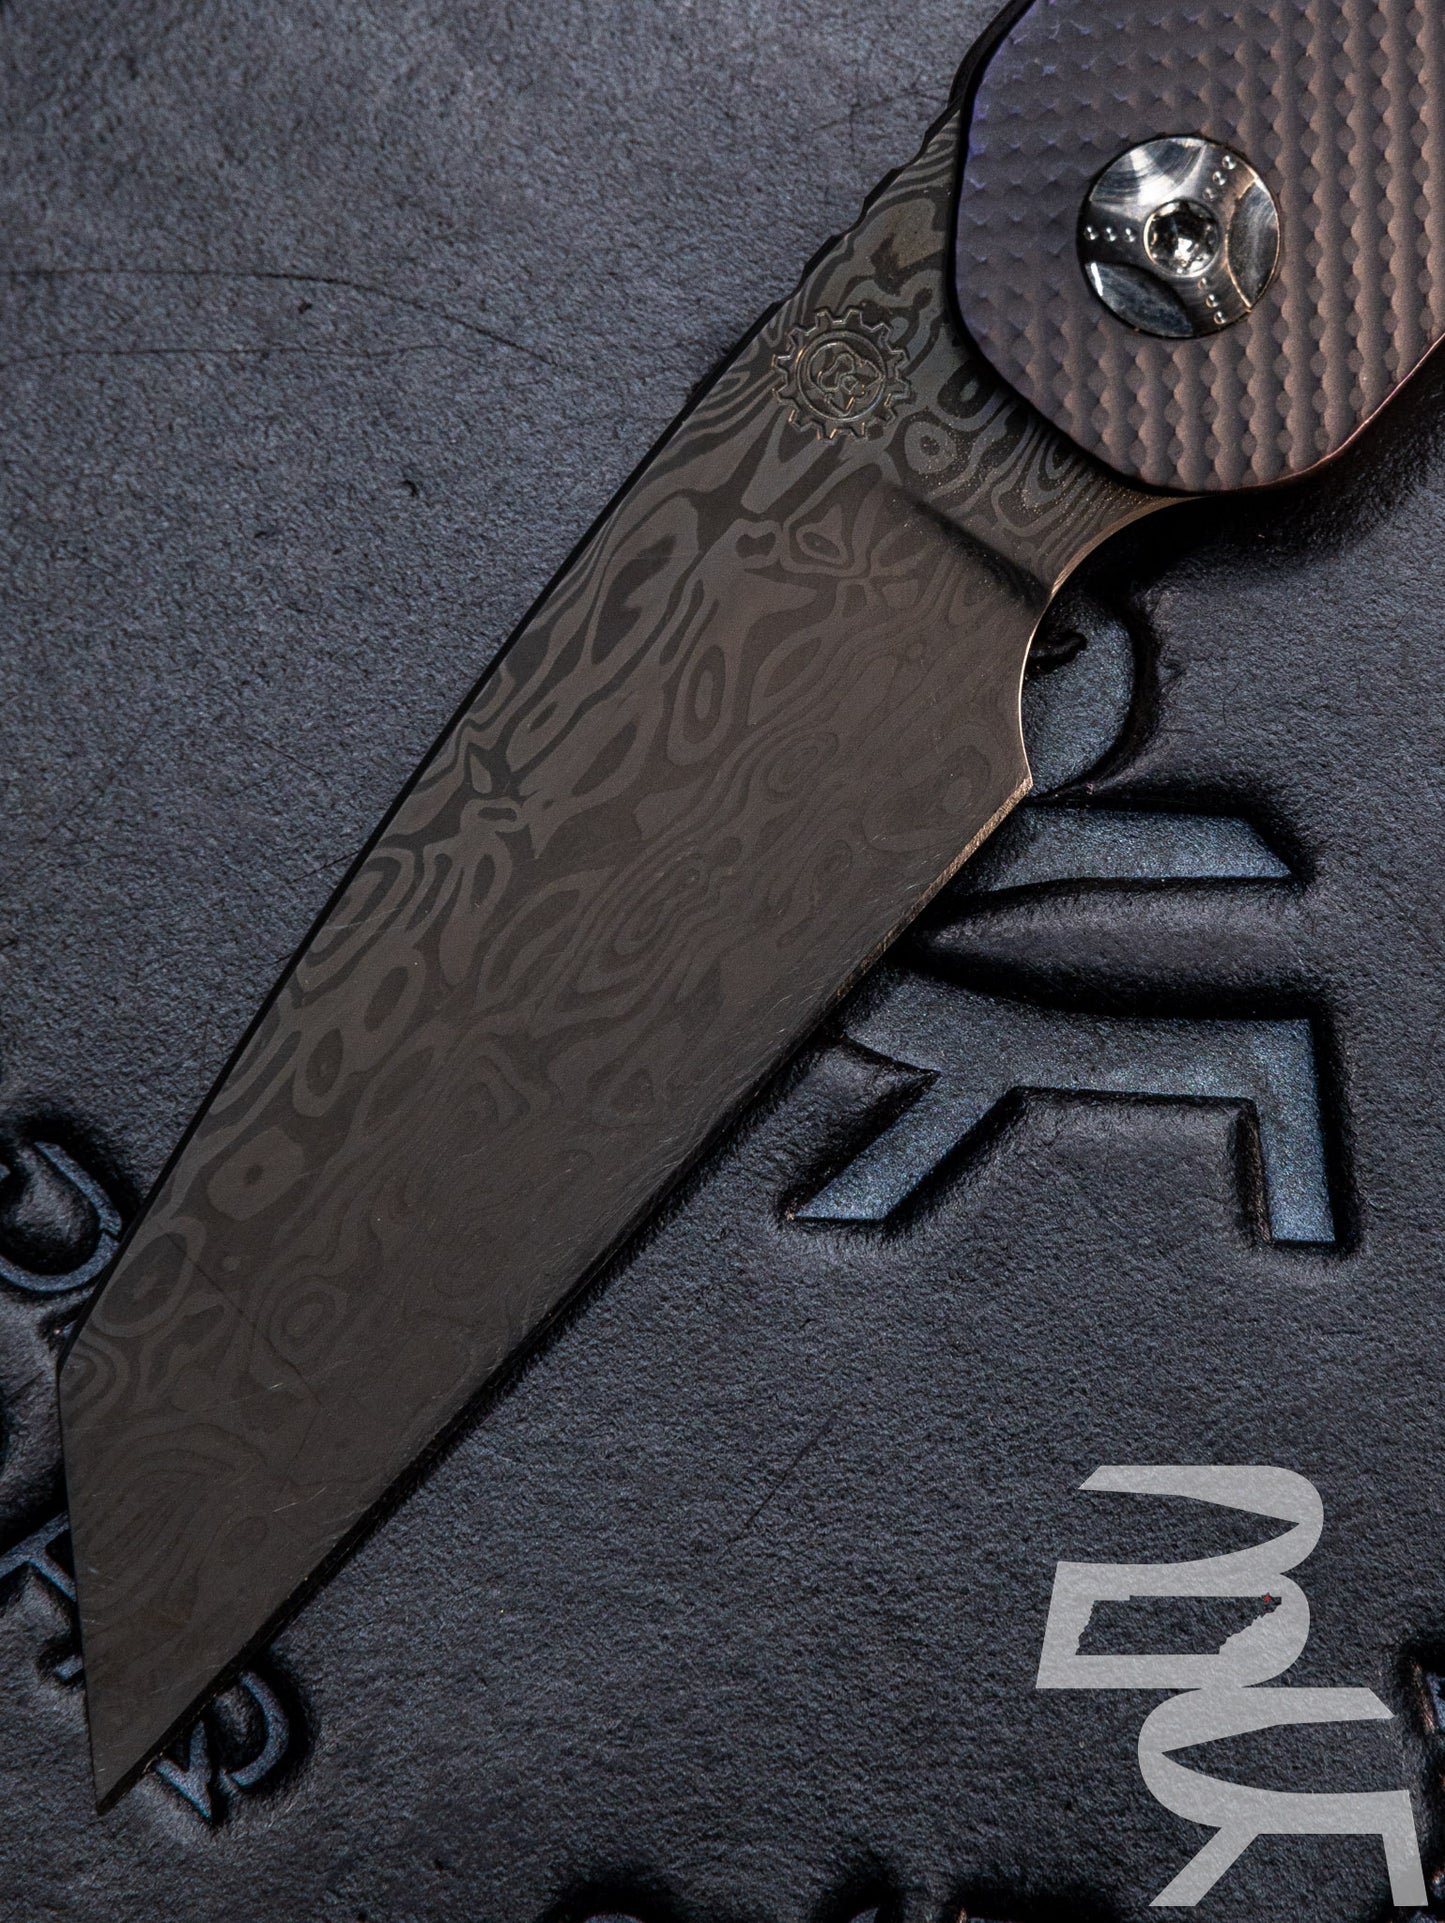 Pre Owned USED Smock Knives Custom SK23 Flipper Knife 3.125" Damasteel Wharncliffe Blade, Gray Milled Titanium Handles, Frame Lock